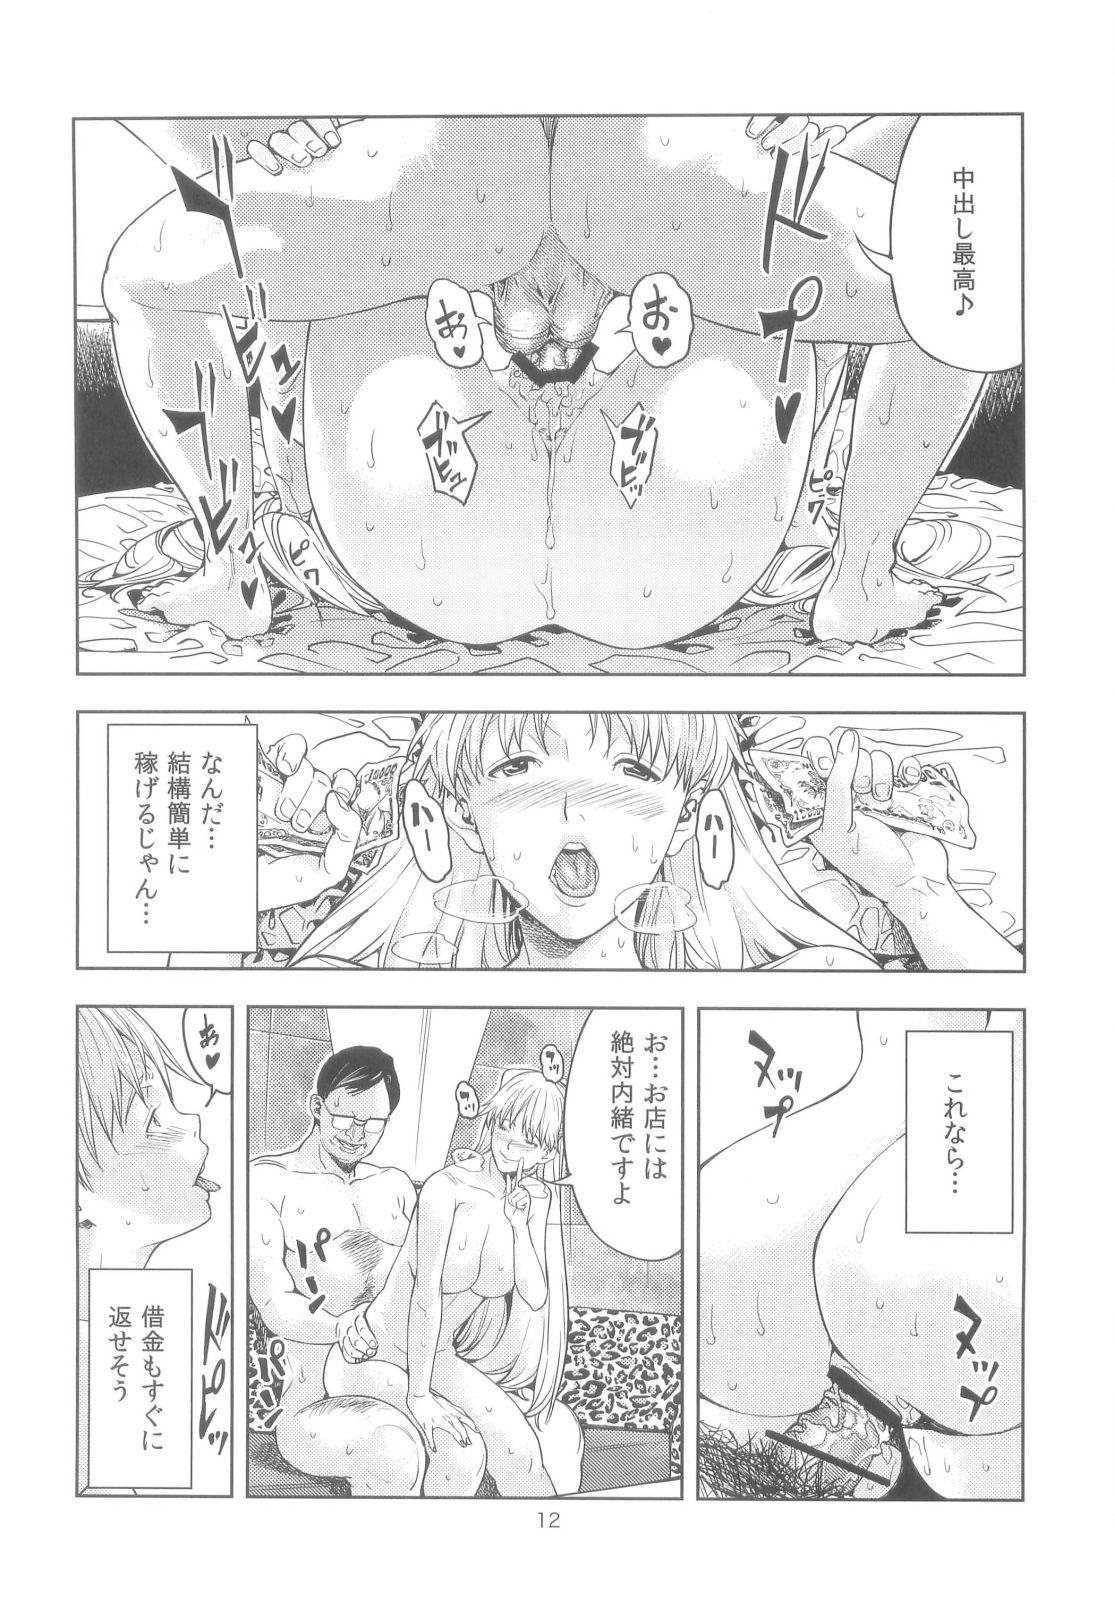 Pasivo Aino Minako - Sailor moon Sex - Page 12